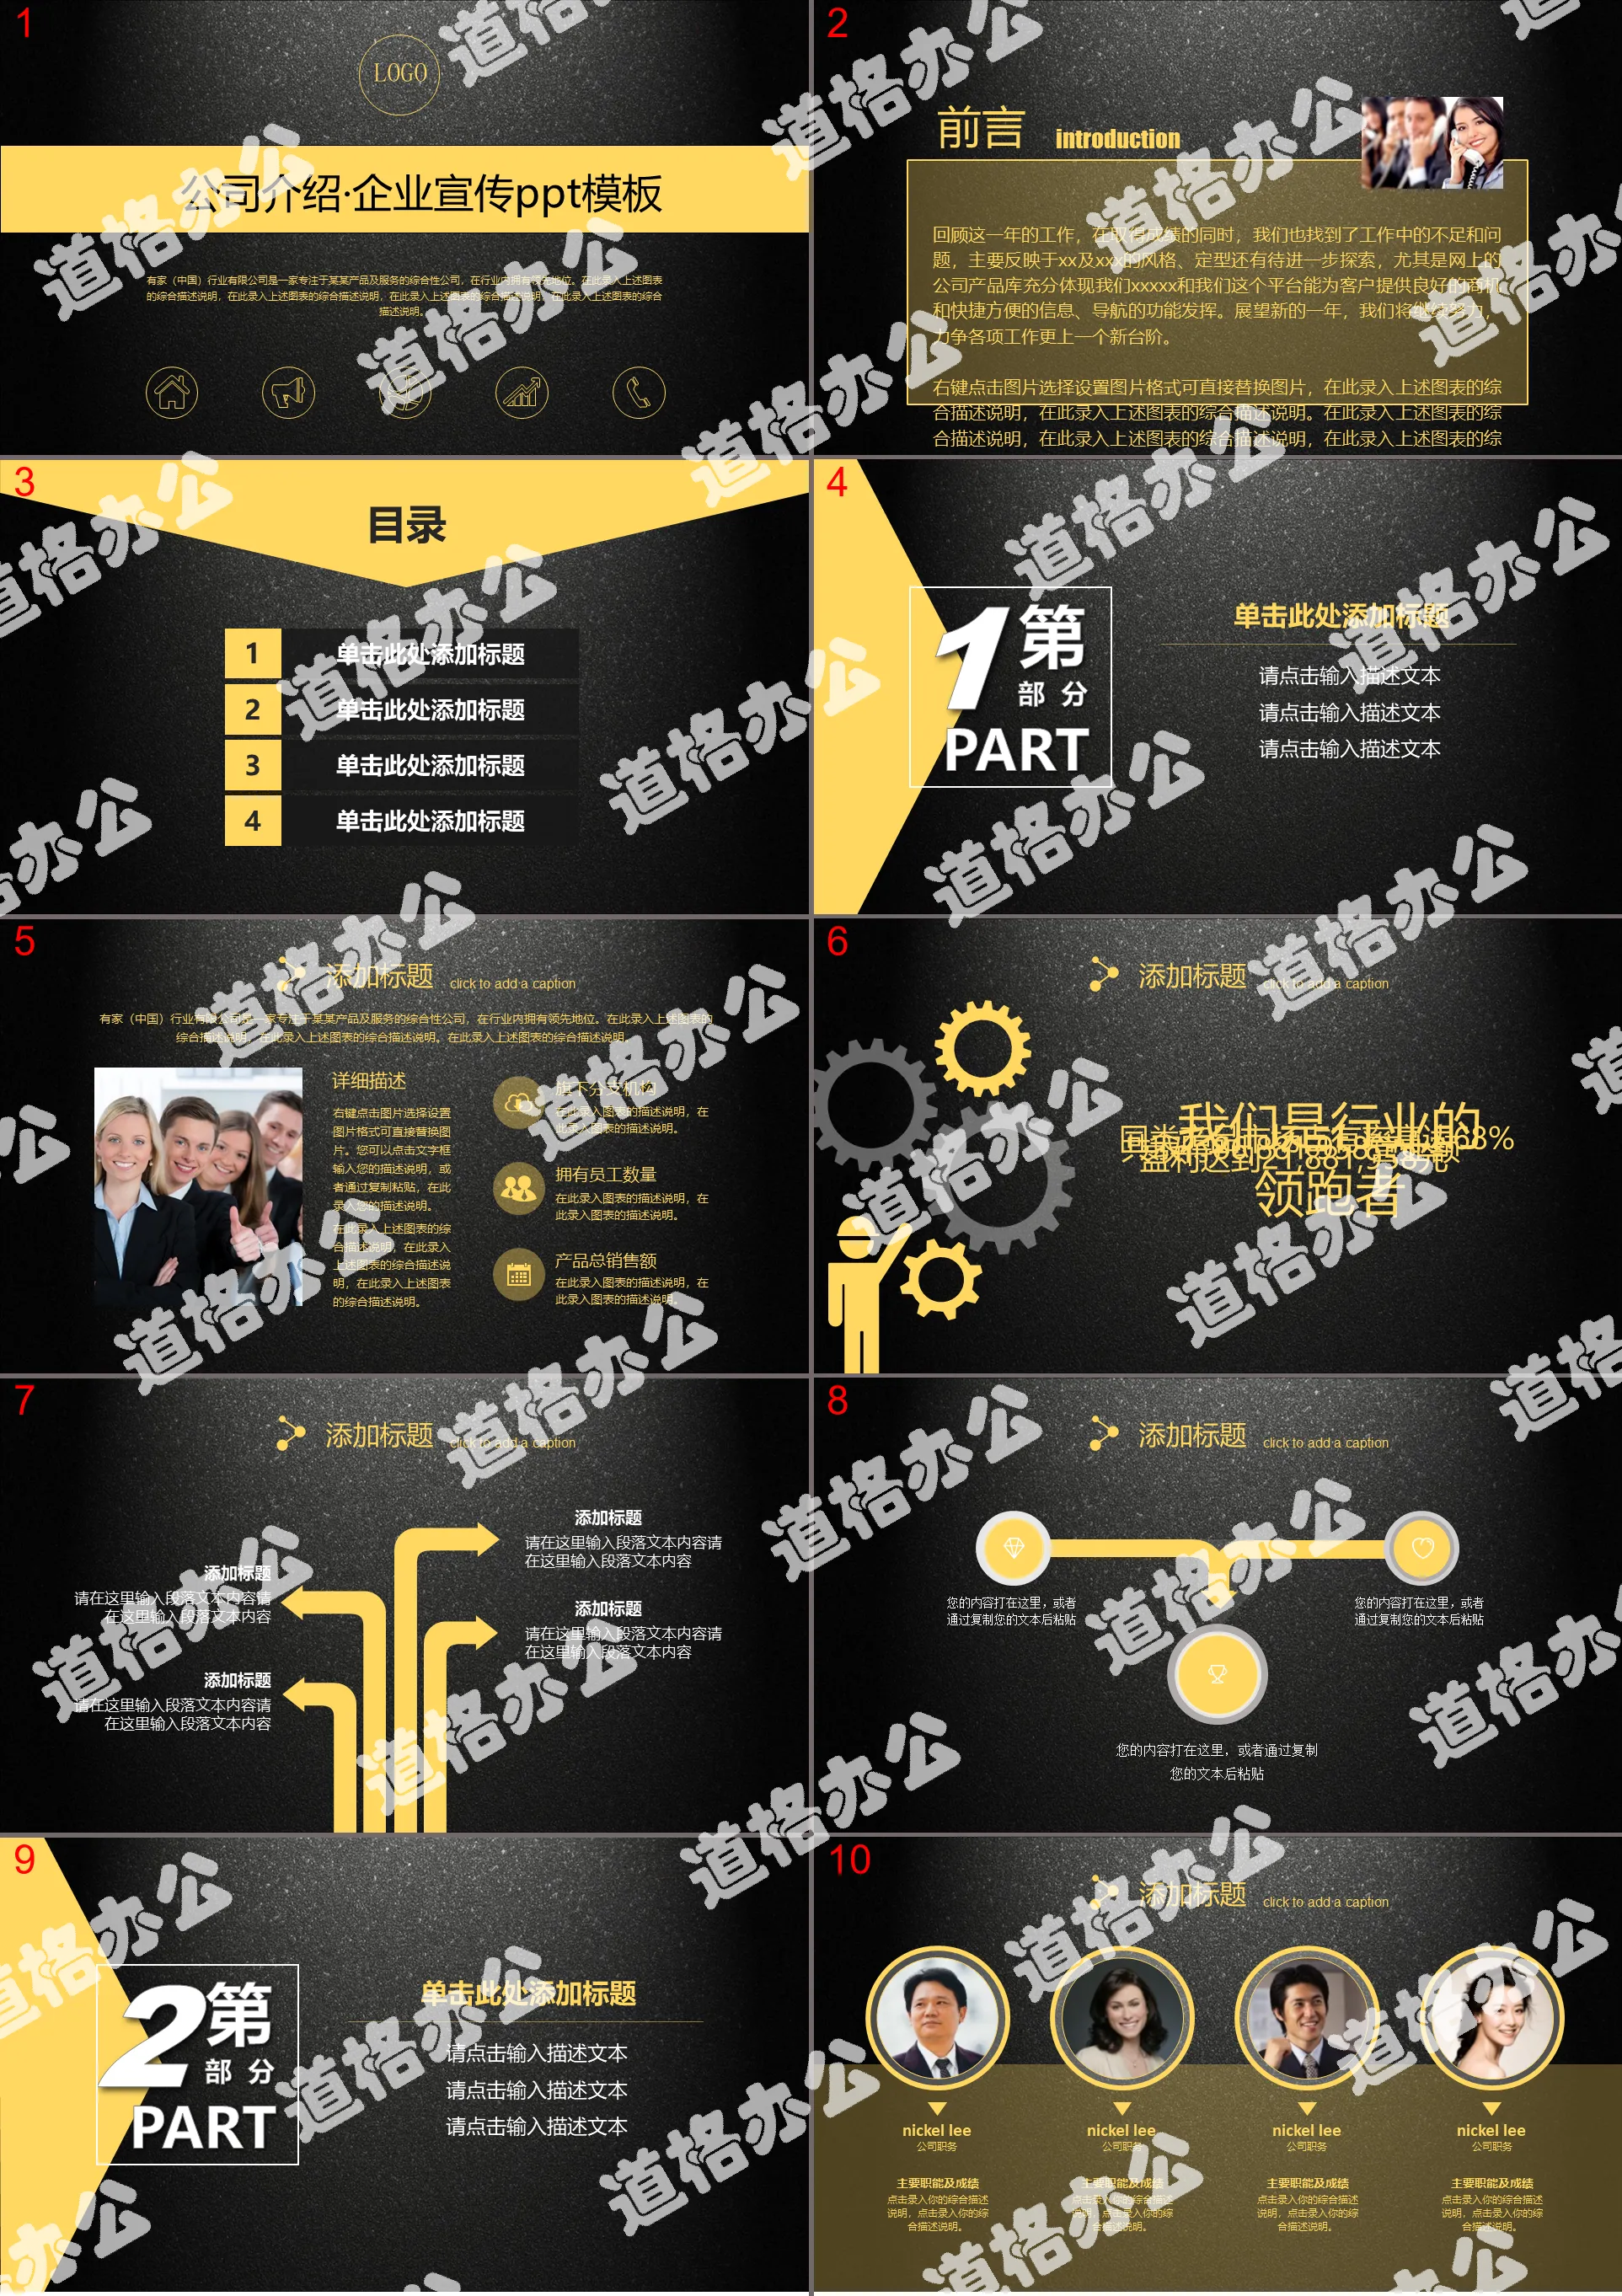 Translucent business enterprise profile PPT template with black gold matte texture